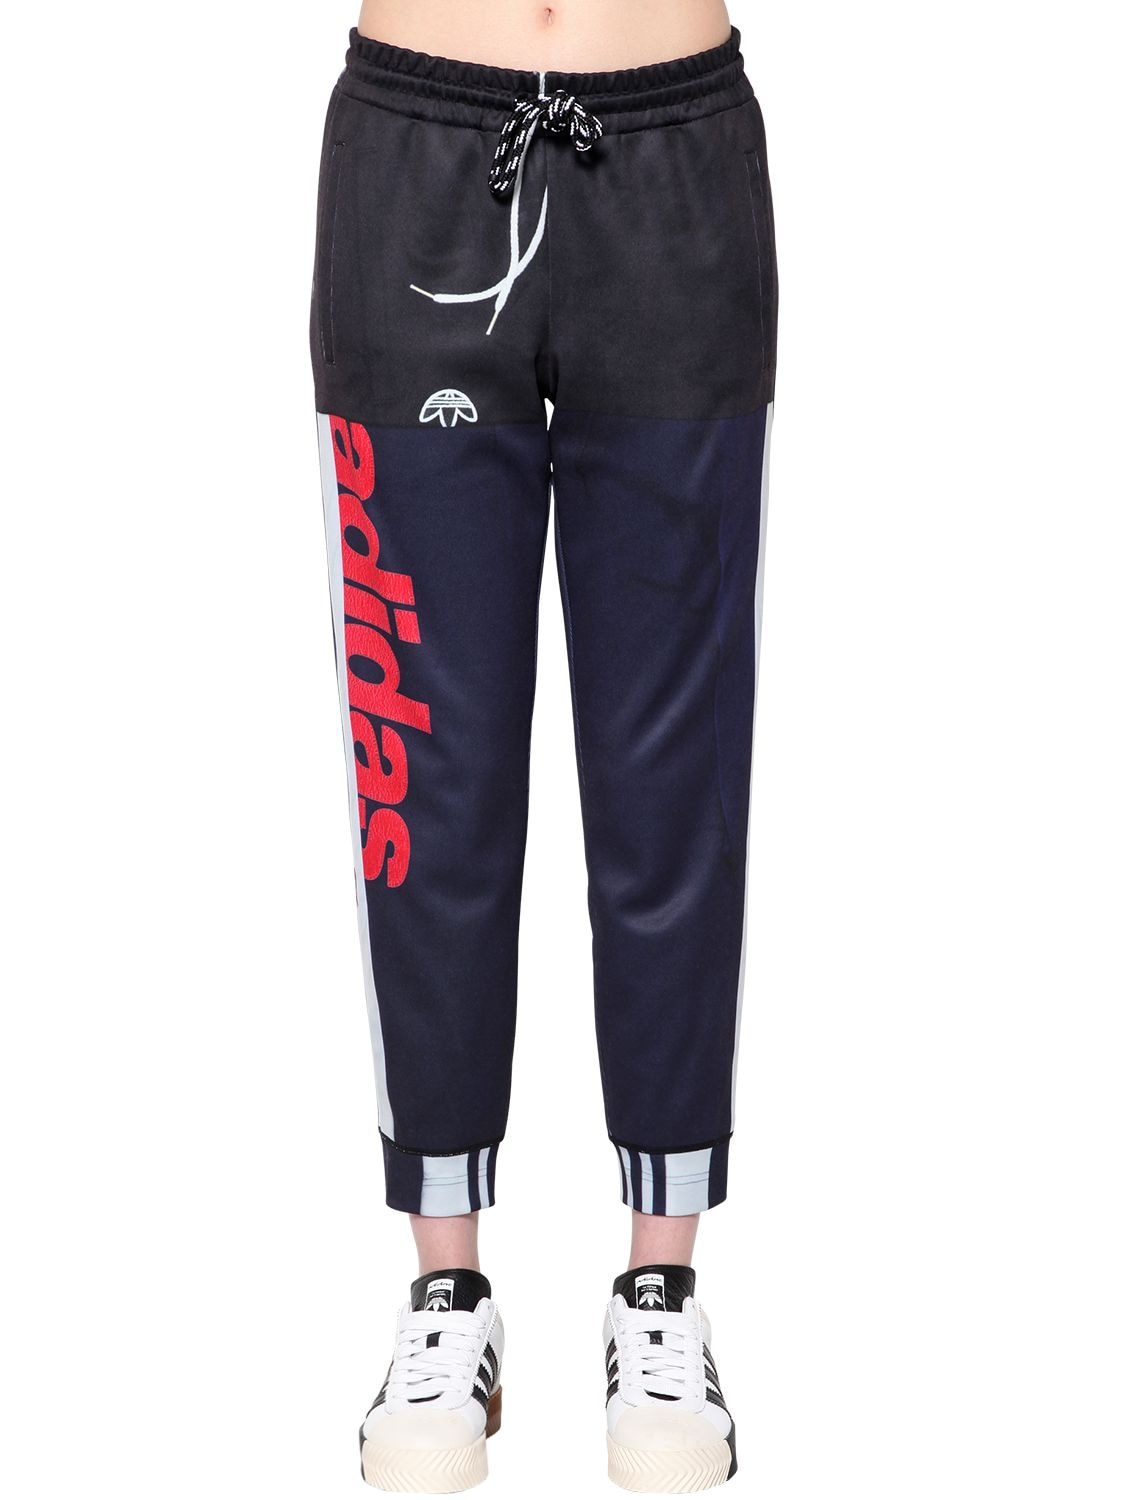 Adidas Originals By Alexander Wang Printed Tech Sweatpants In Navy